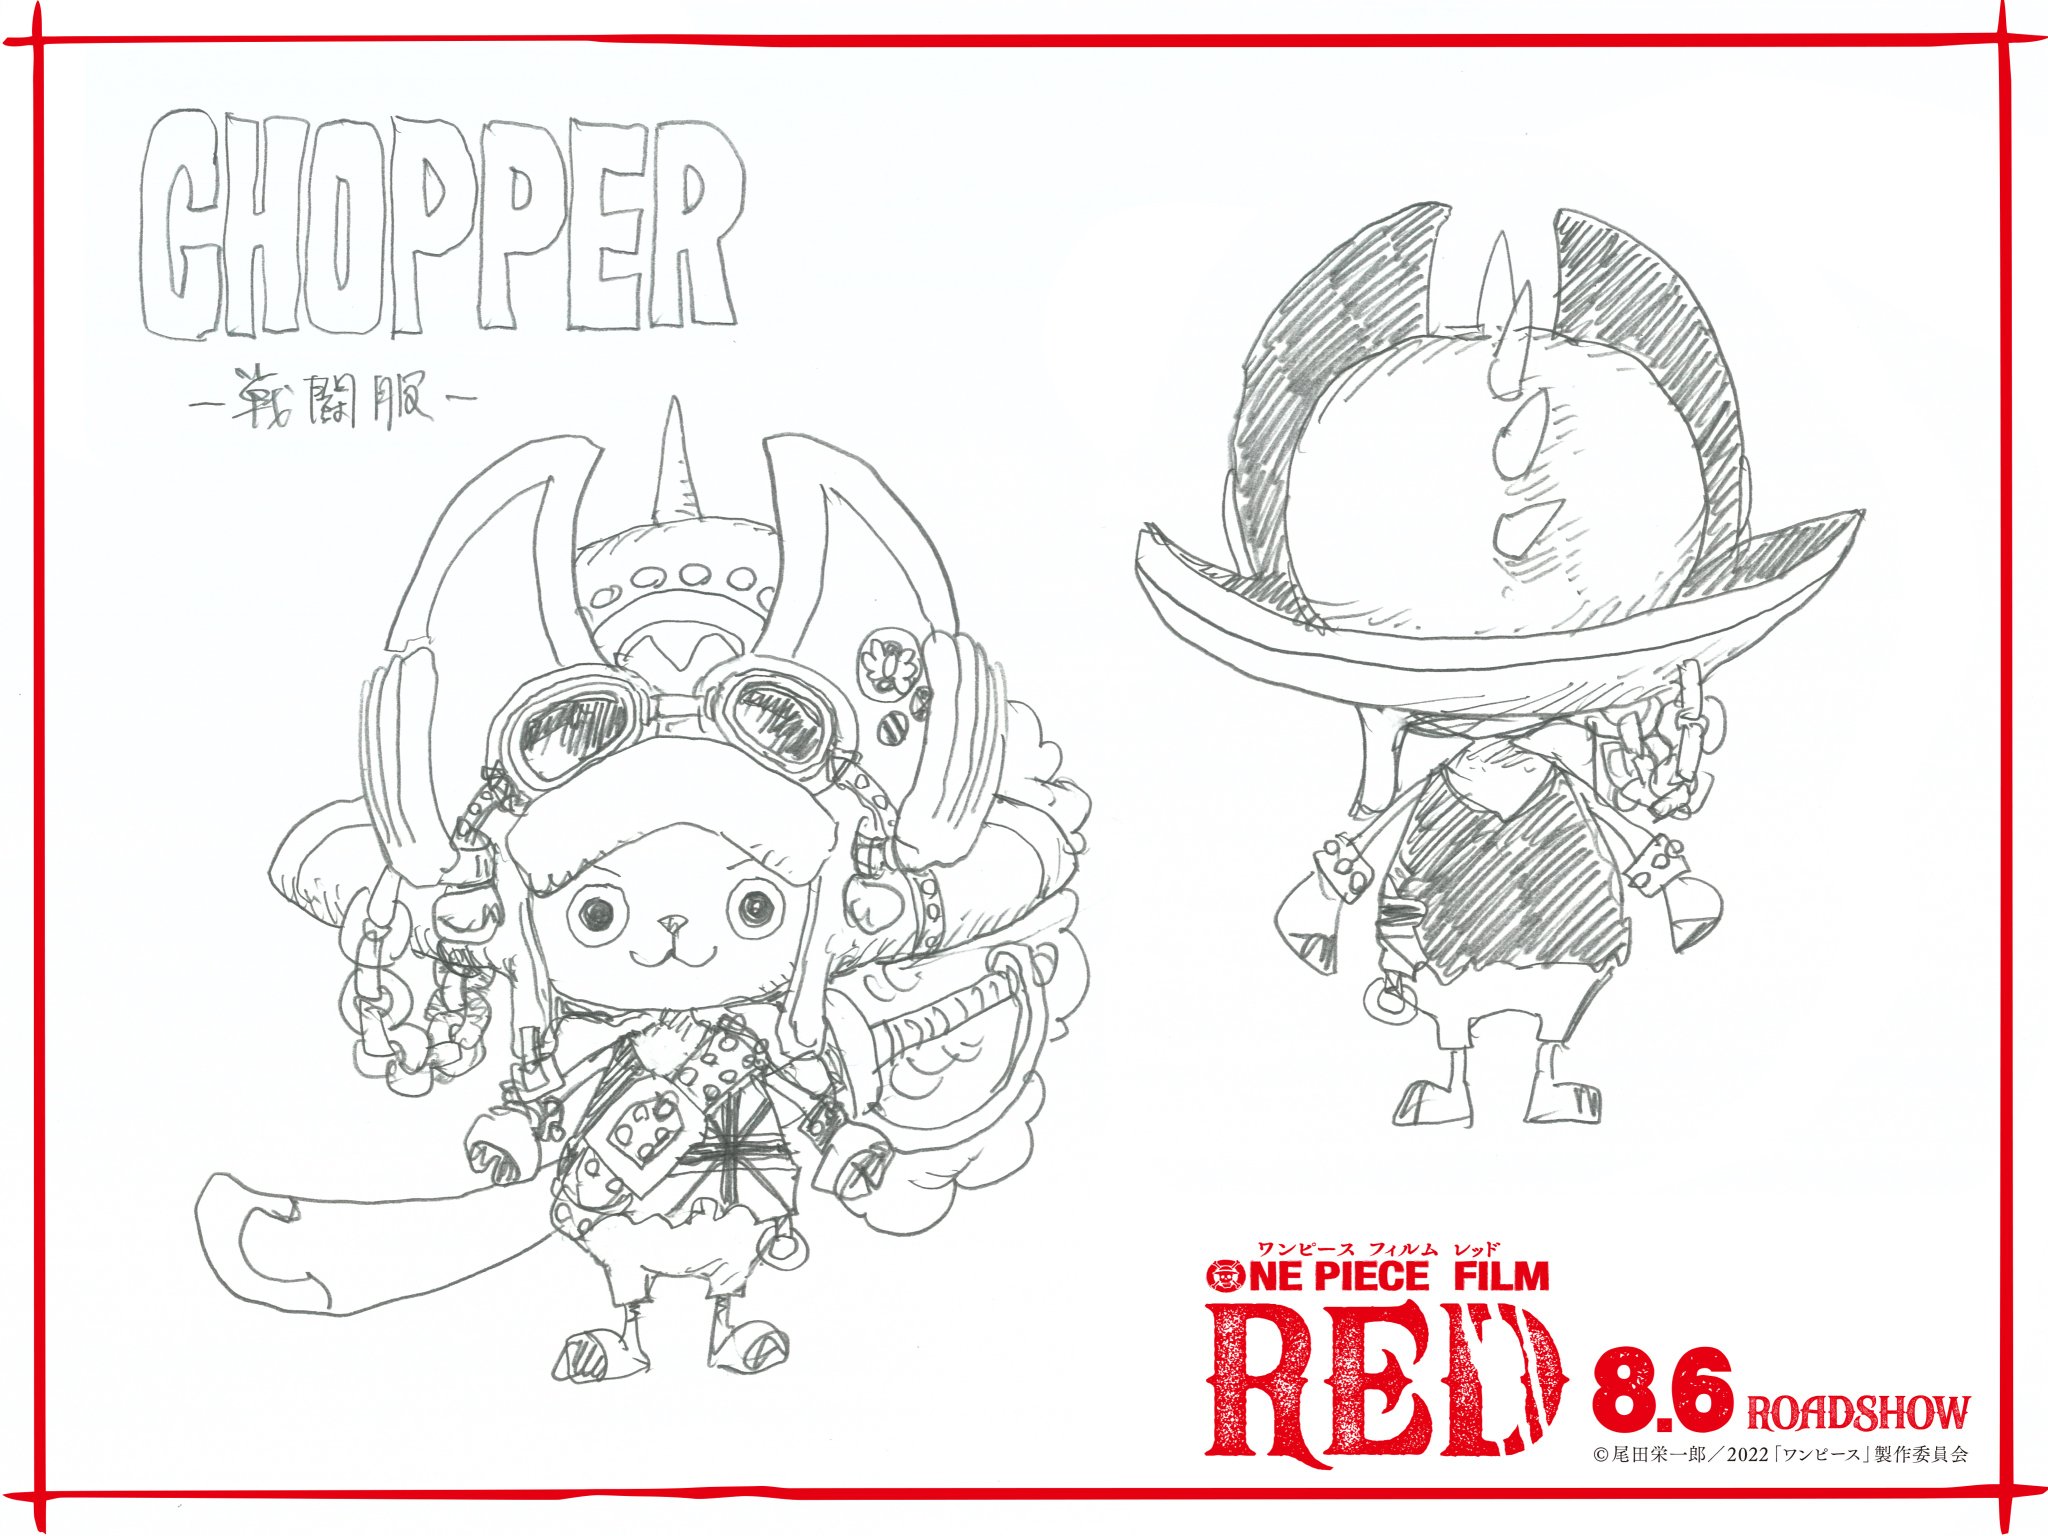 One piece filme red: "uniforme de combate" de chopper.